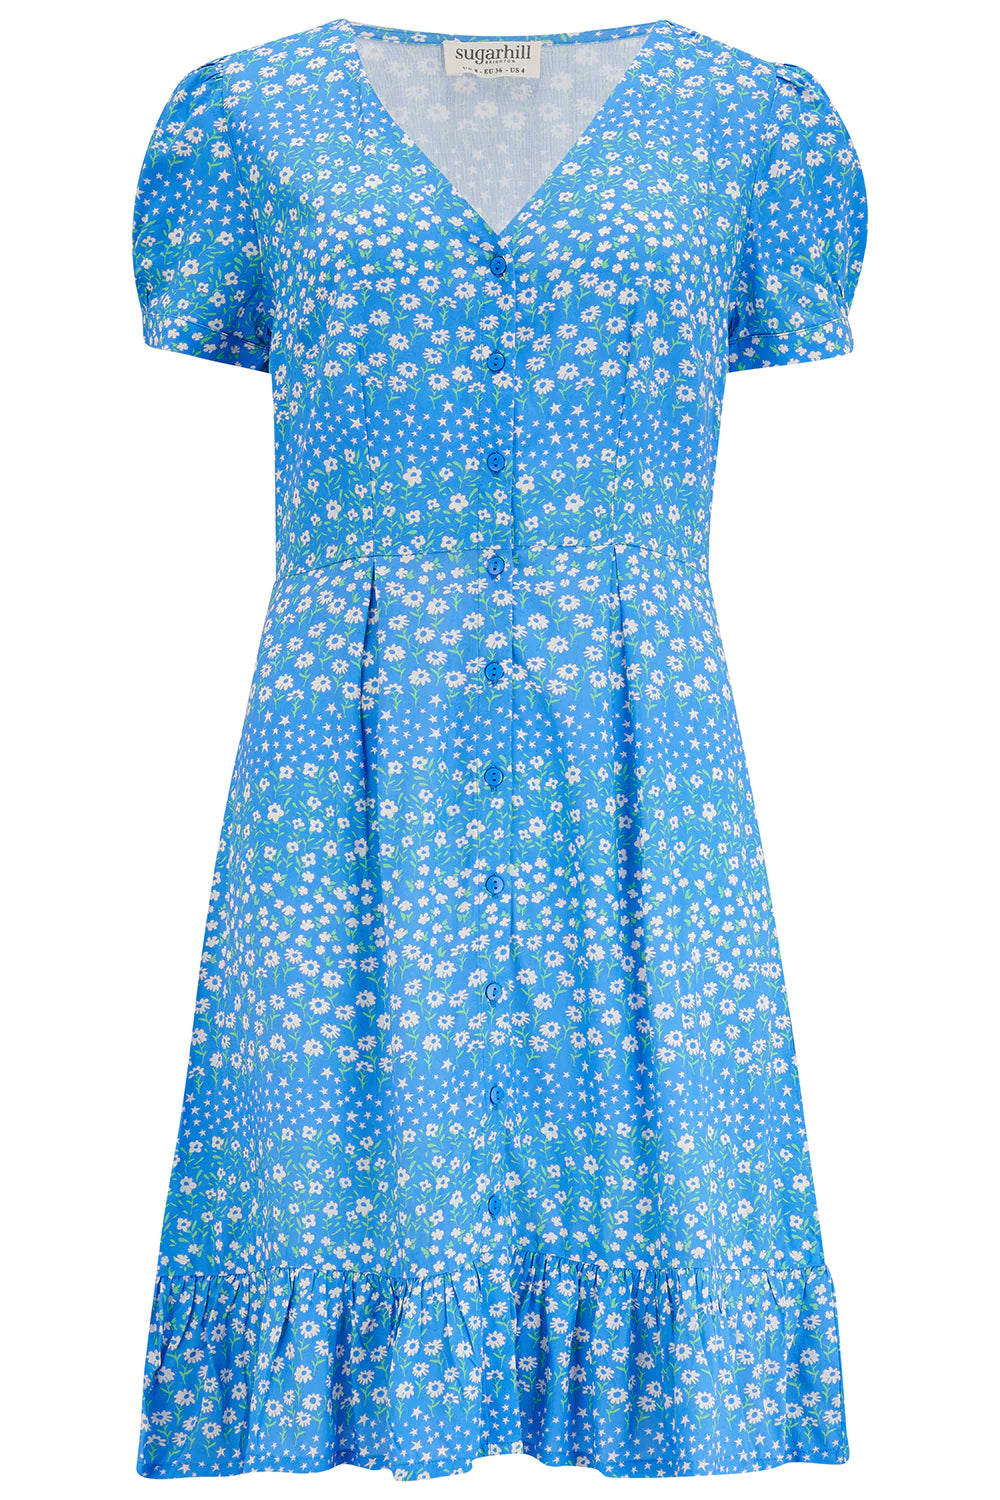 Sugarhill Brighton Marigold Tea Dress - Blue, Ditsy Star Stripe